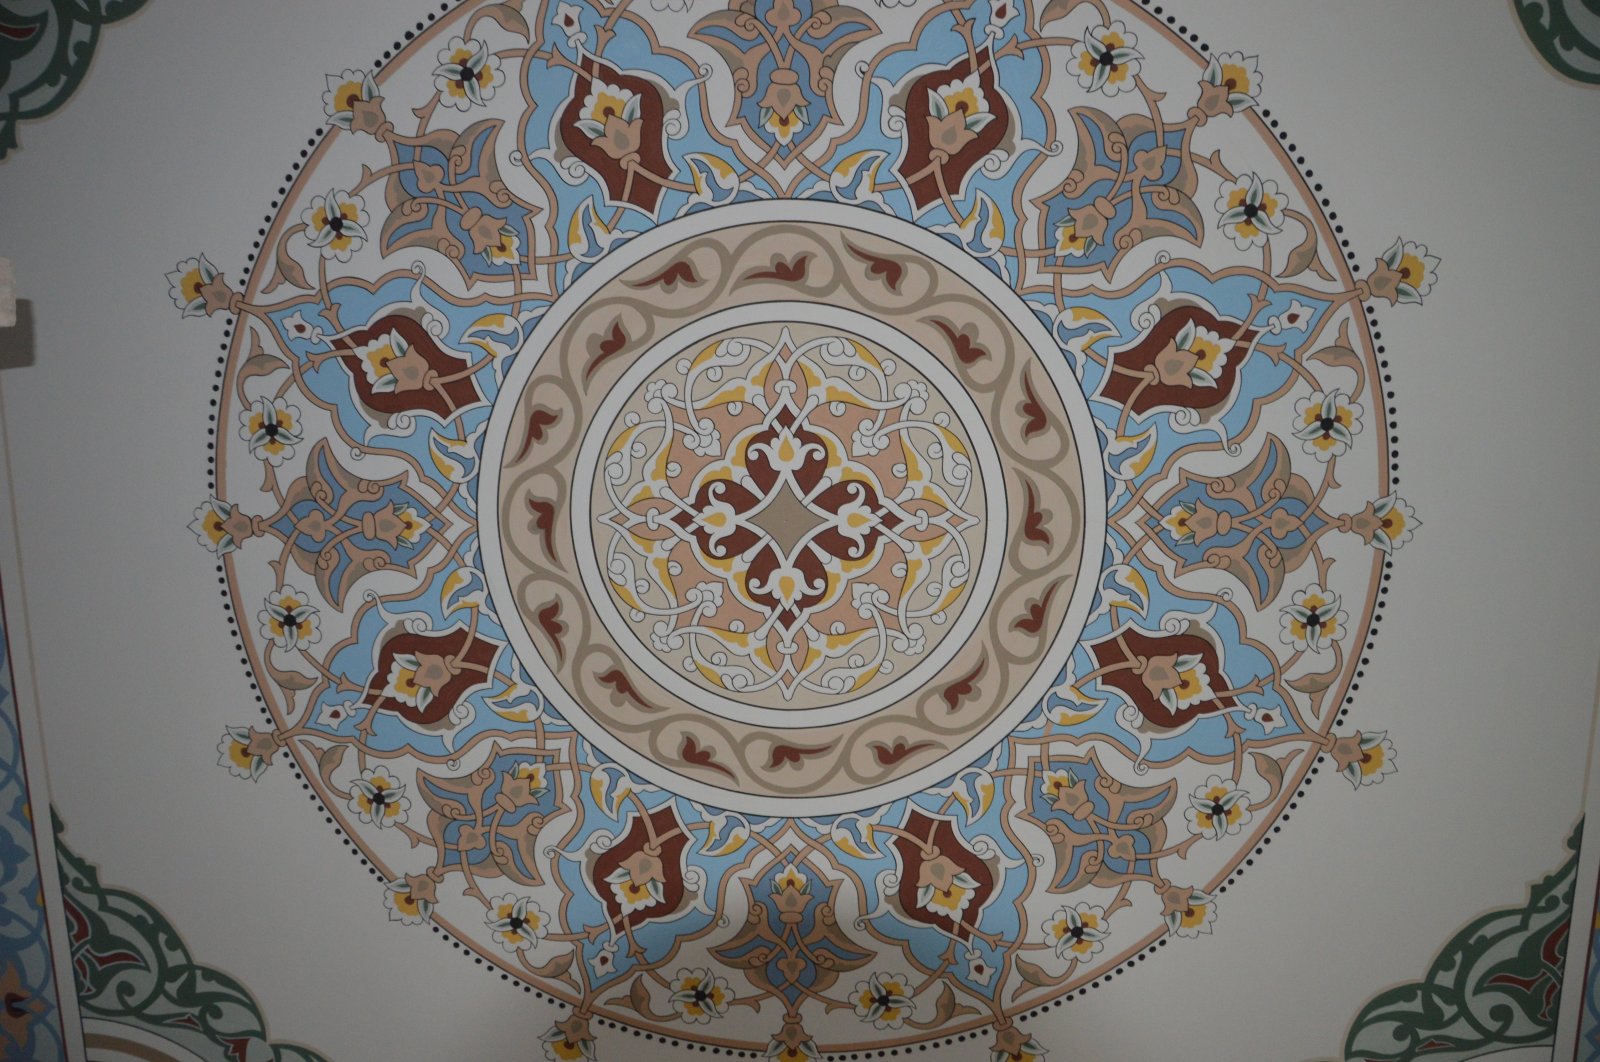 Sıddık Korkutata has spent 30 years decorating the interiors of mosques in various cities of Türkiye with Seljuk and Ottoman motifs, Sakarya province, Türkiye, Dec. 15, 2022. (AA Photo)